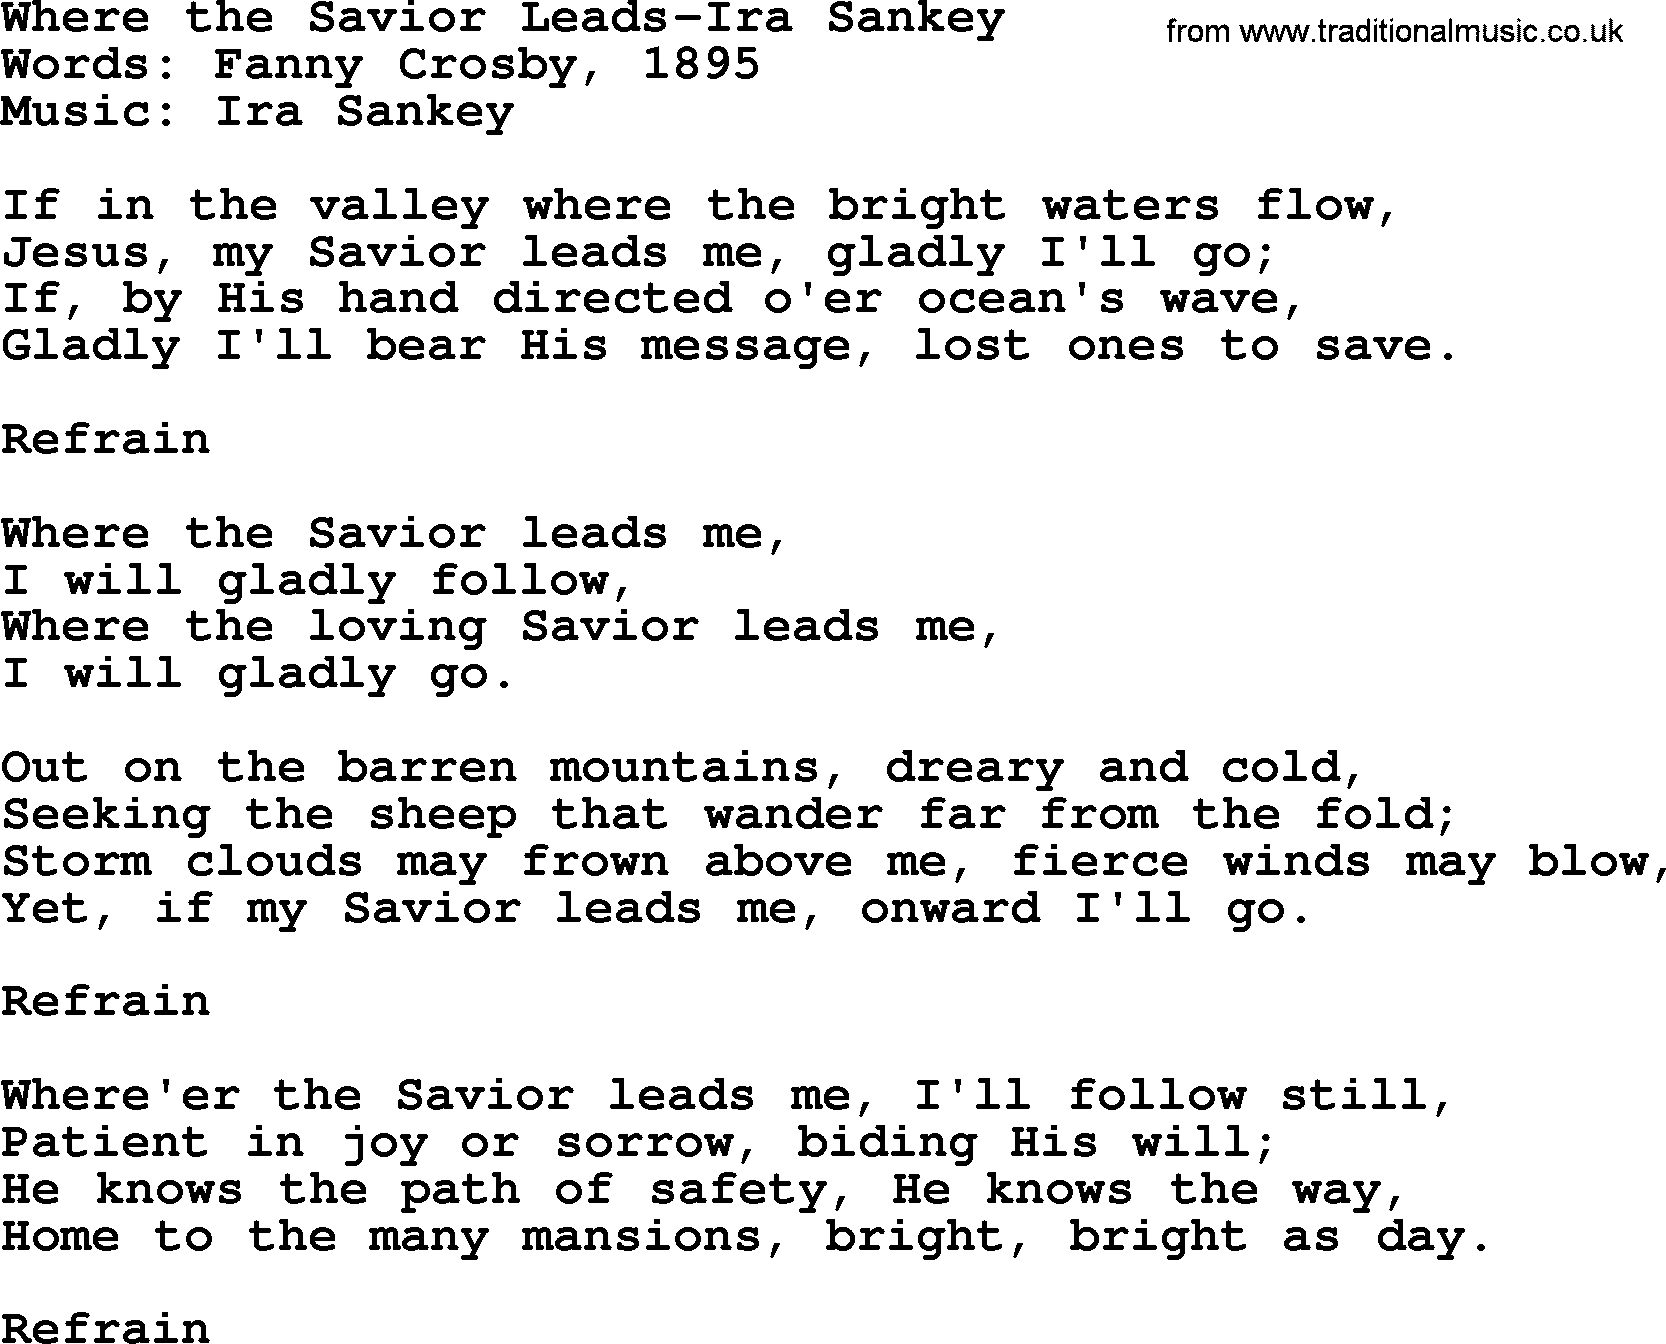 Ira Sankey hymn: Where the Savior Leads-Ira Sankey, lyrics